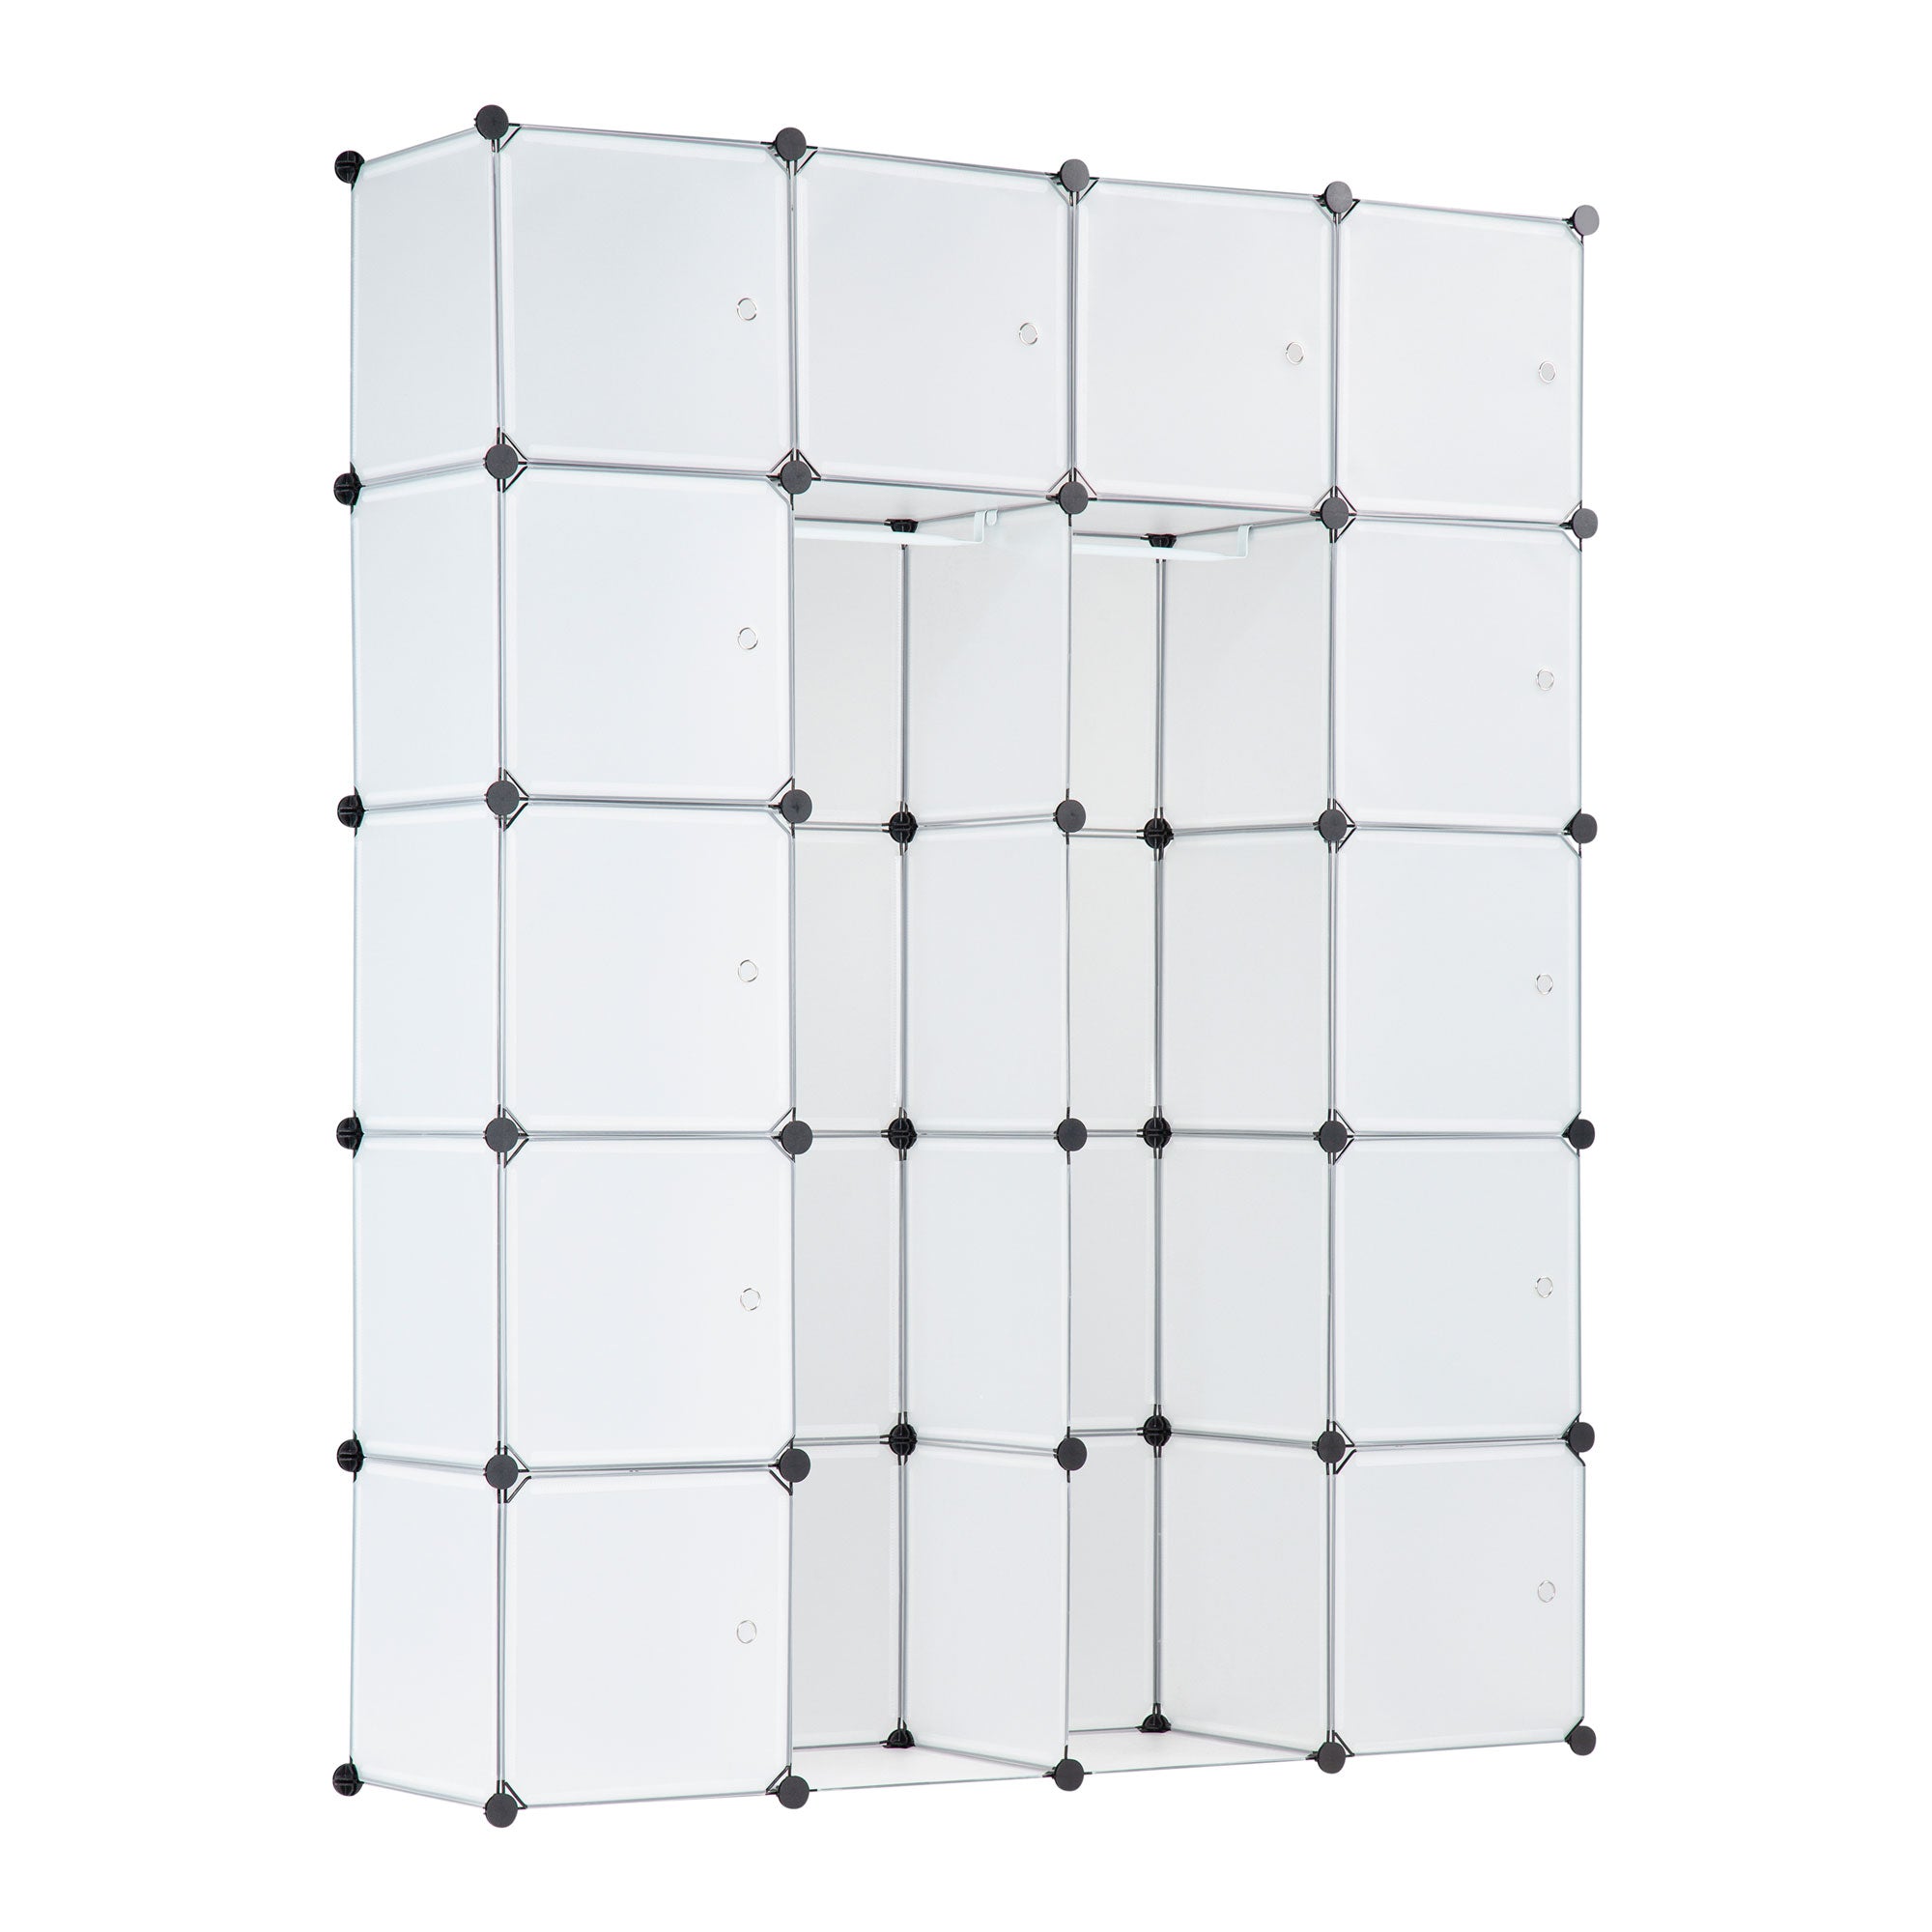 Modular Wardrobe Storage Organizer - 12 Cubes